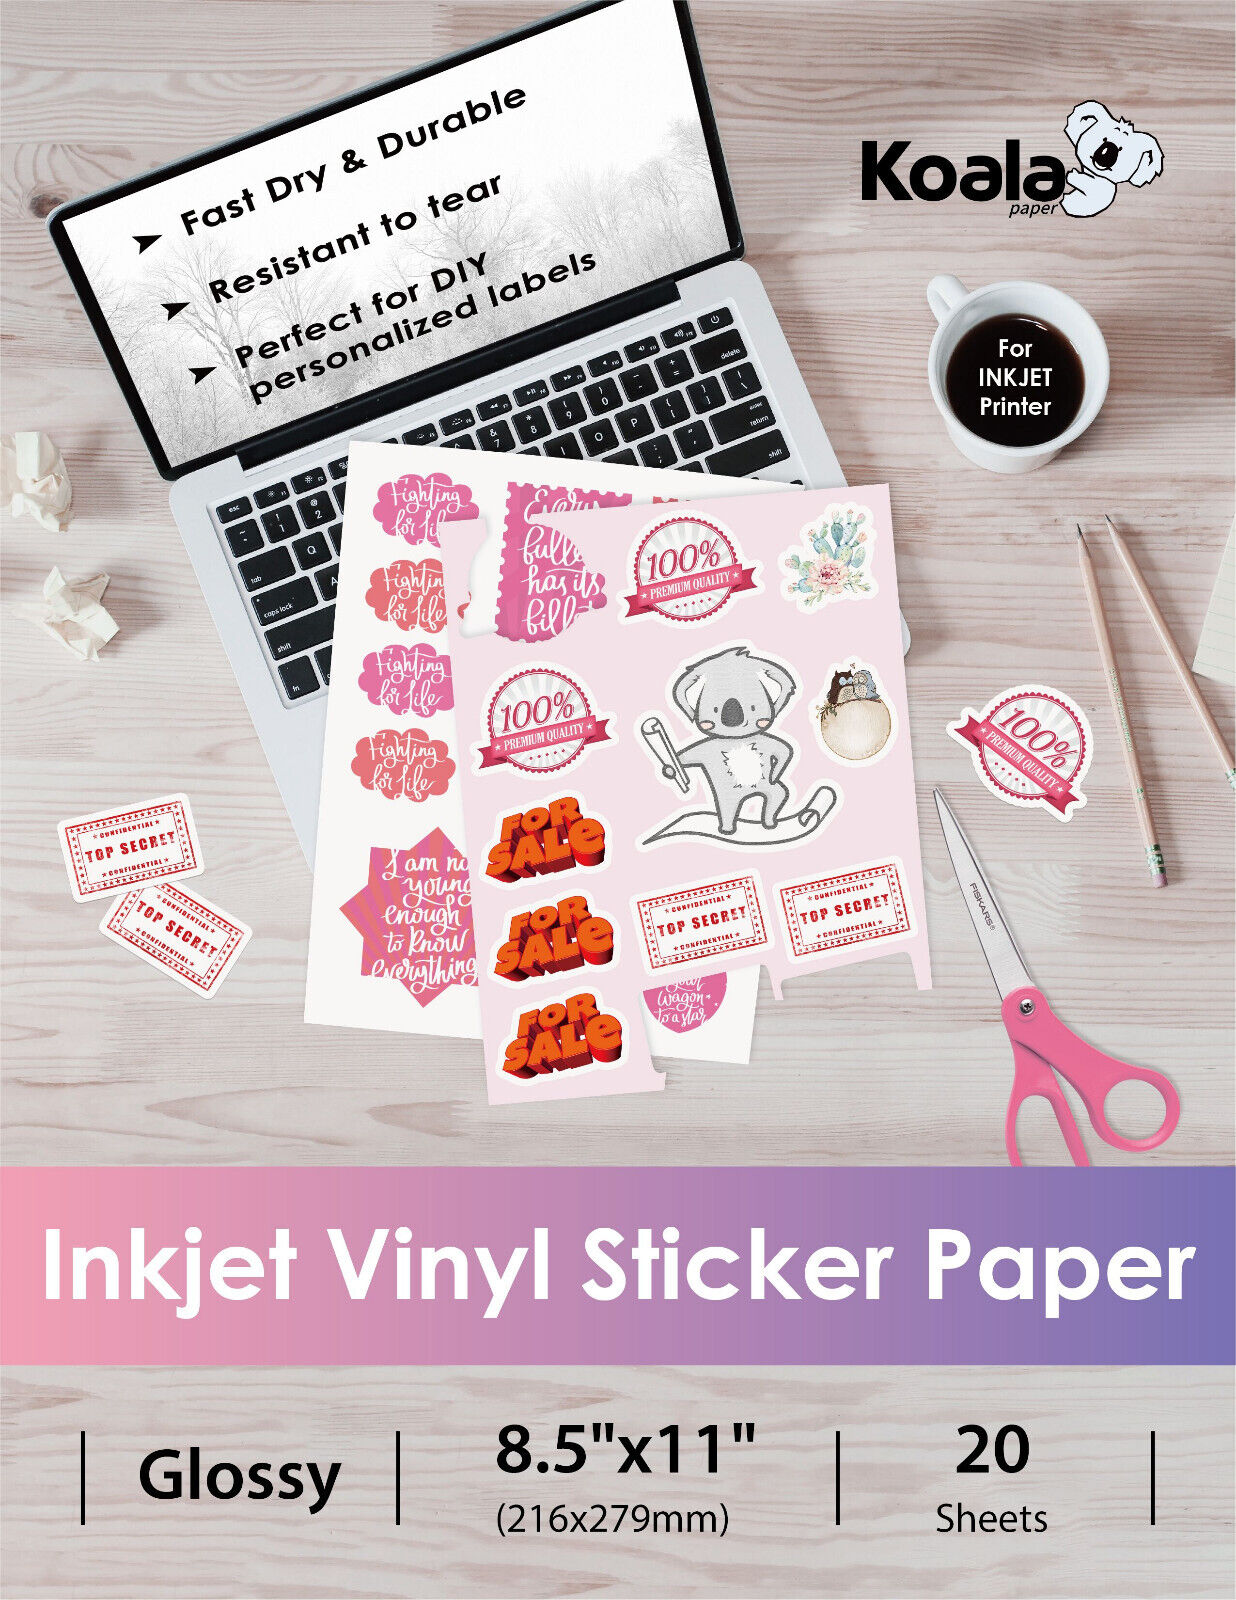 Lot Koala Printable Vinyl Sticker Paper Waterproof Glossy White 8.5x11 11x17 US